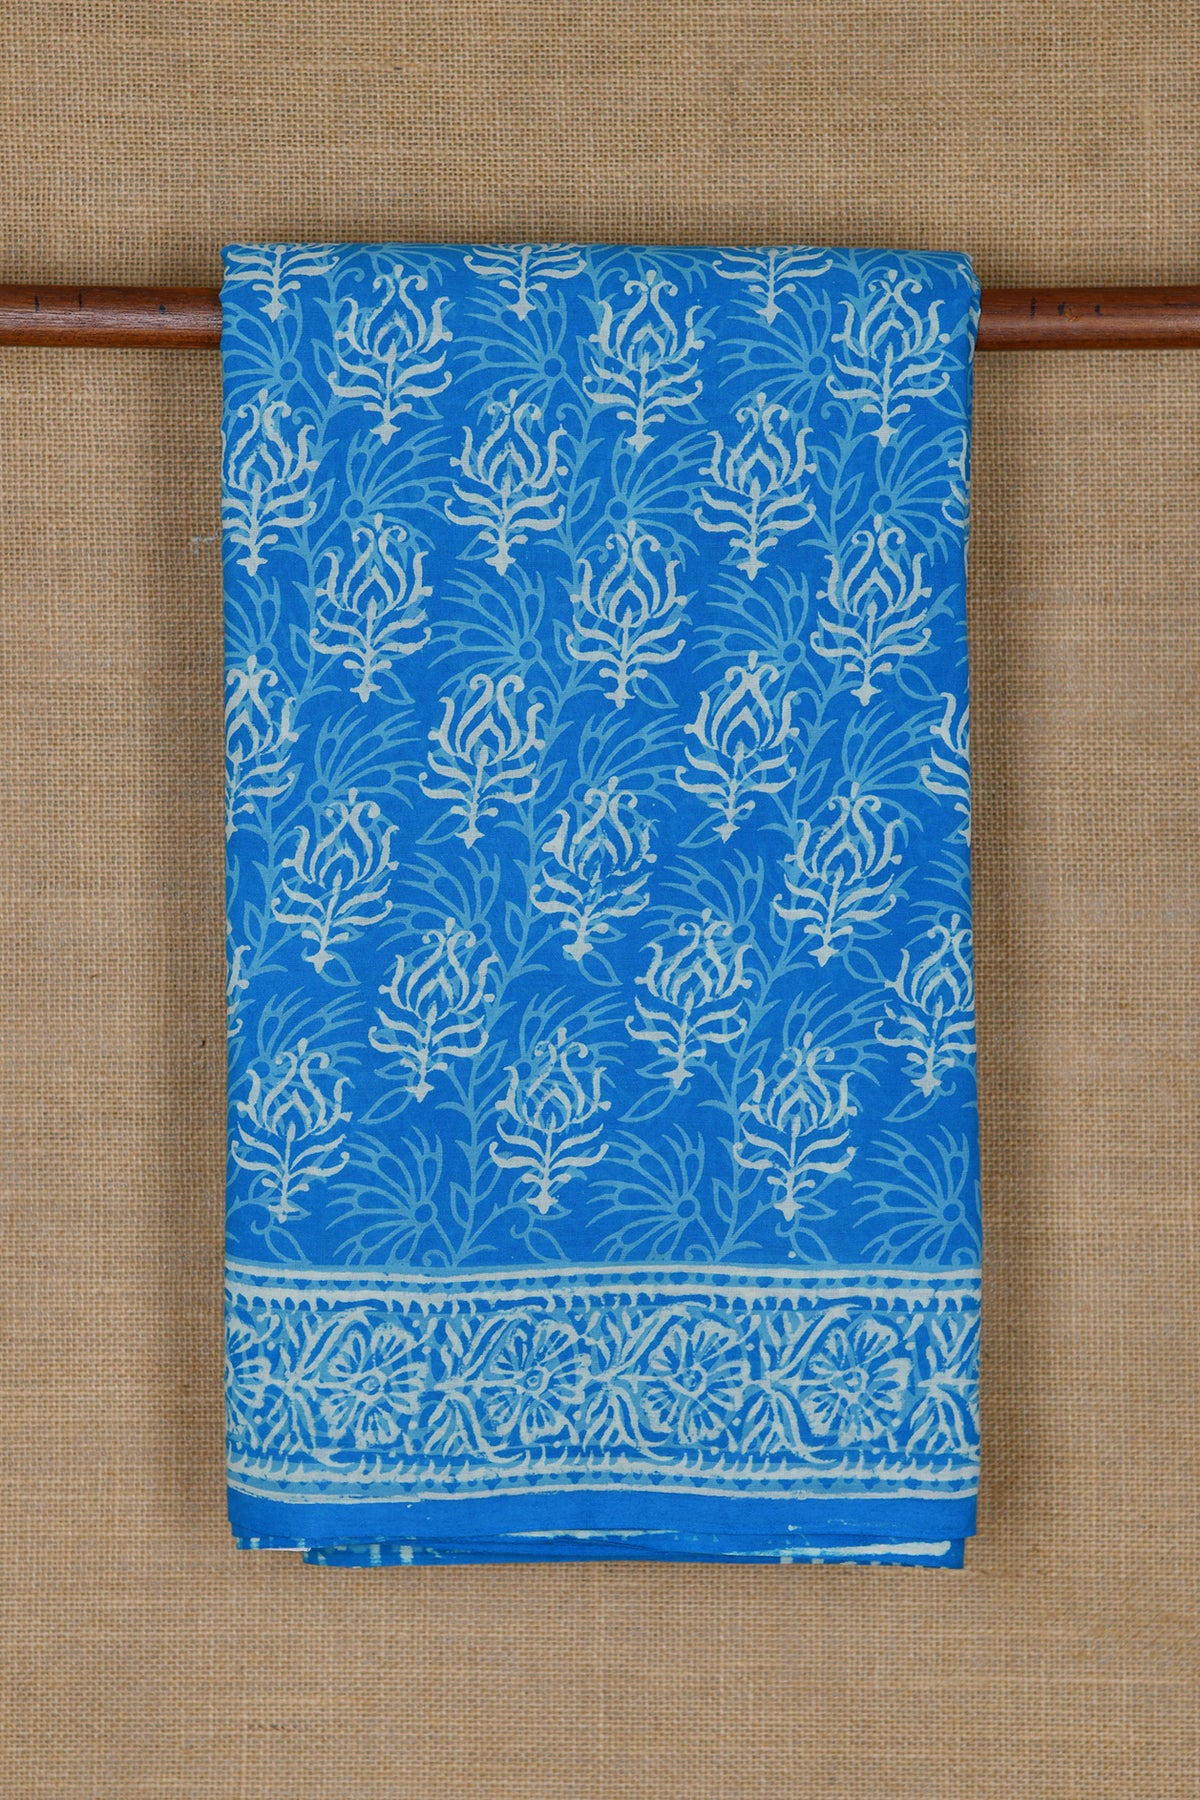 Floral Design Sky Blue Jaipur Cotton Saree